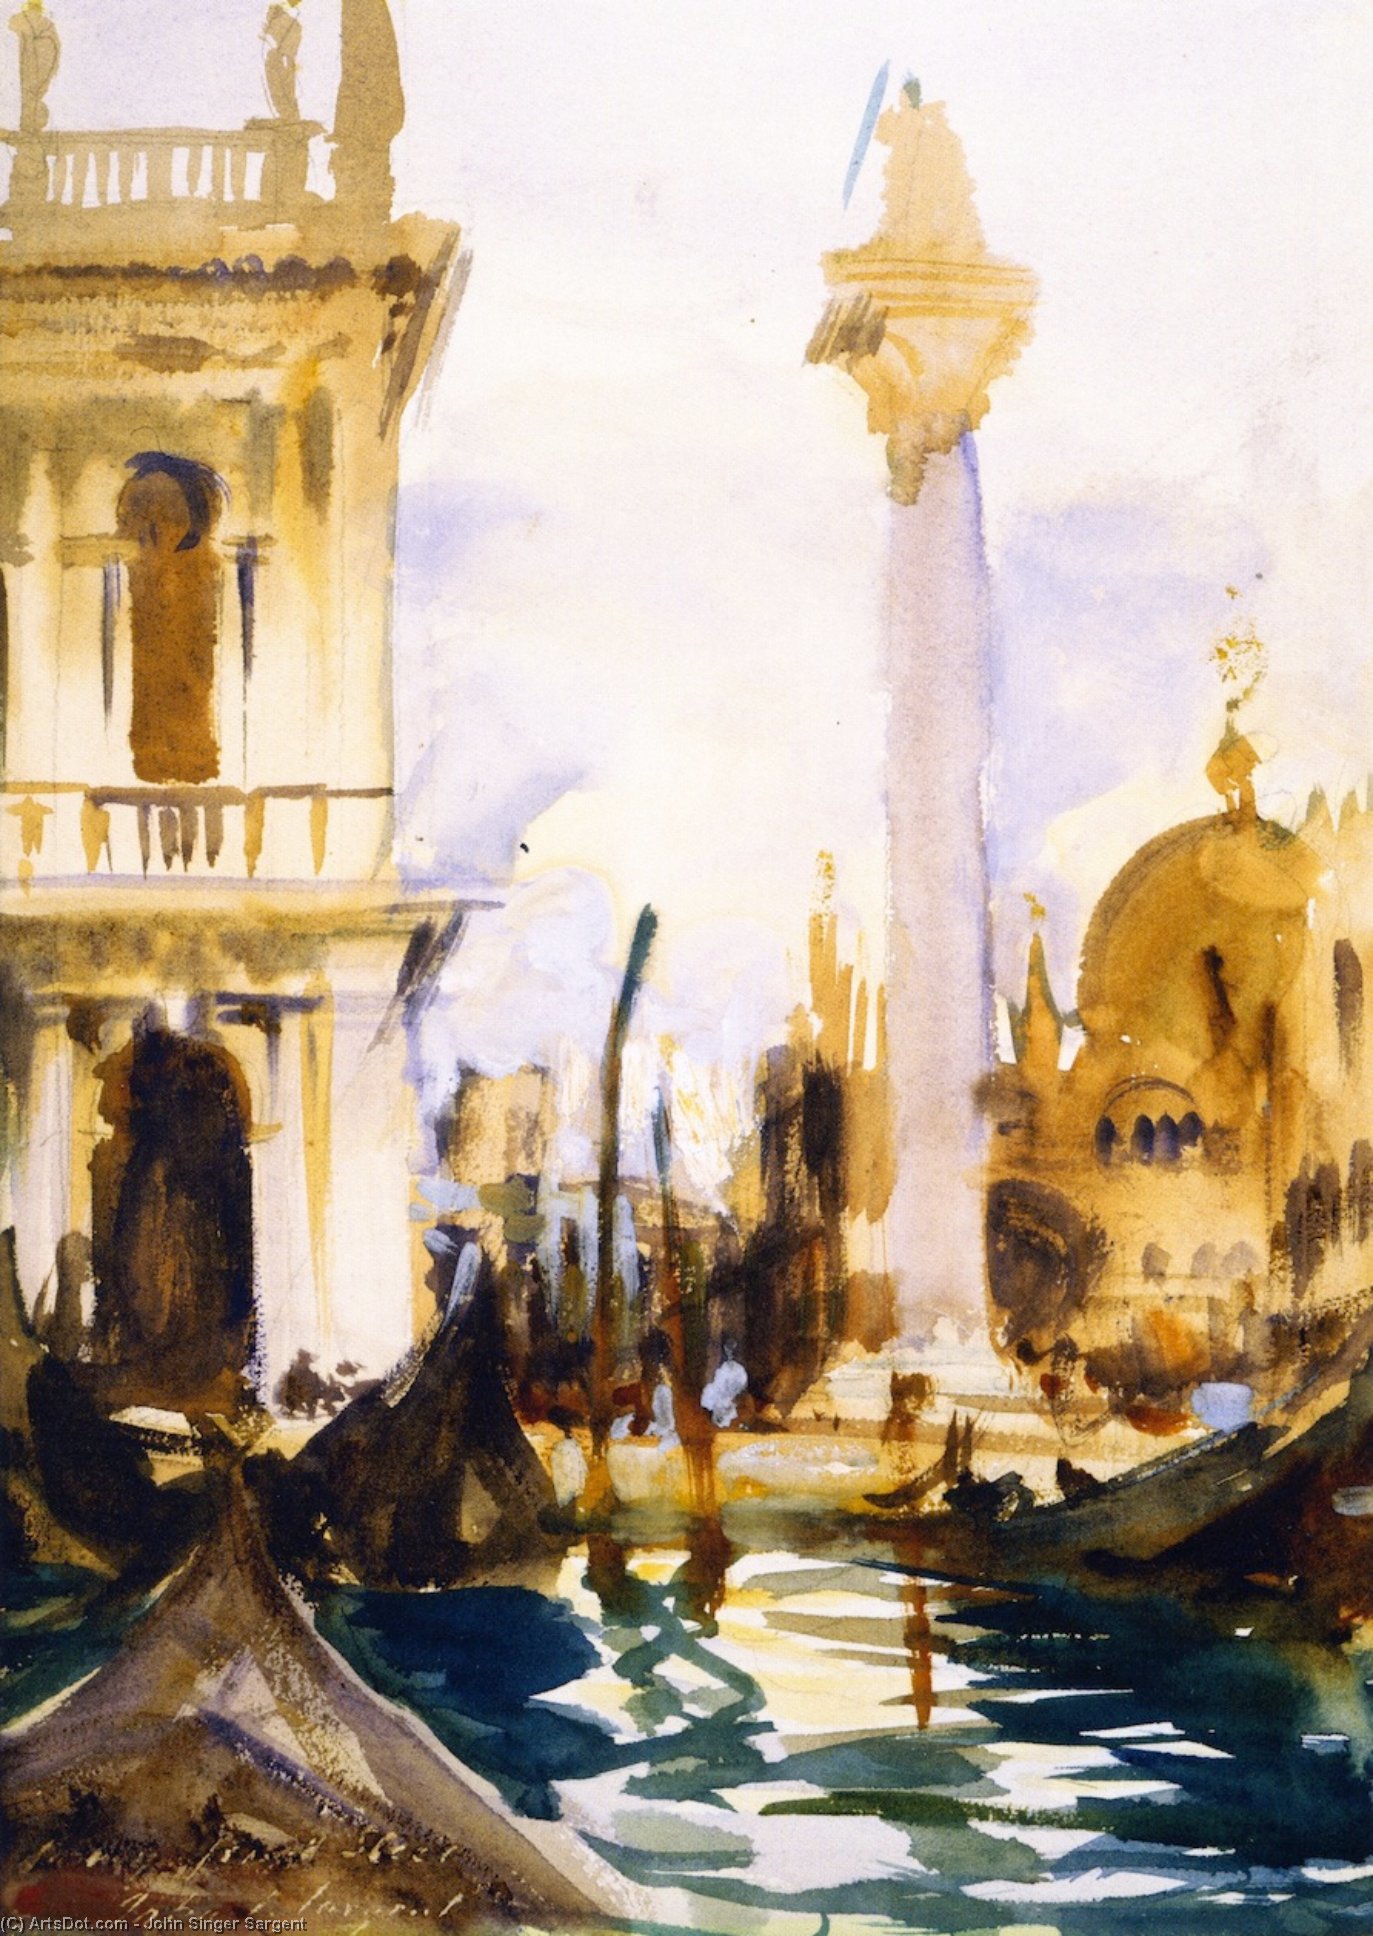  Artwork Replica Piazzetta, No. 2, 1902 by John Singer Sargent (1856-1925, Italy) | ArtsDot.com